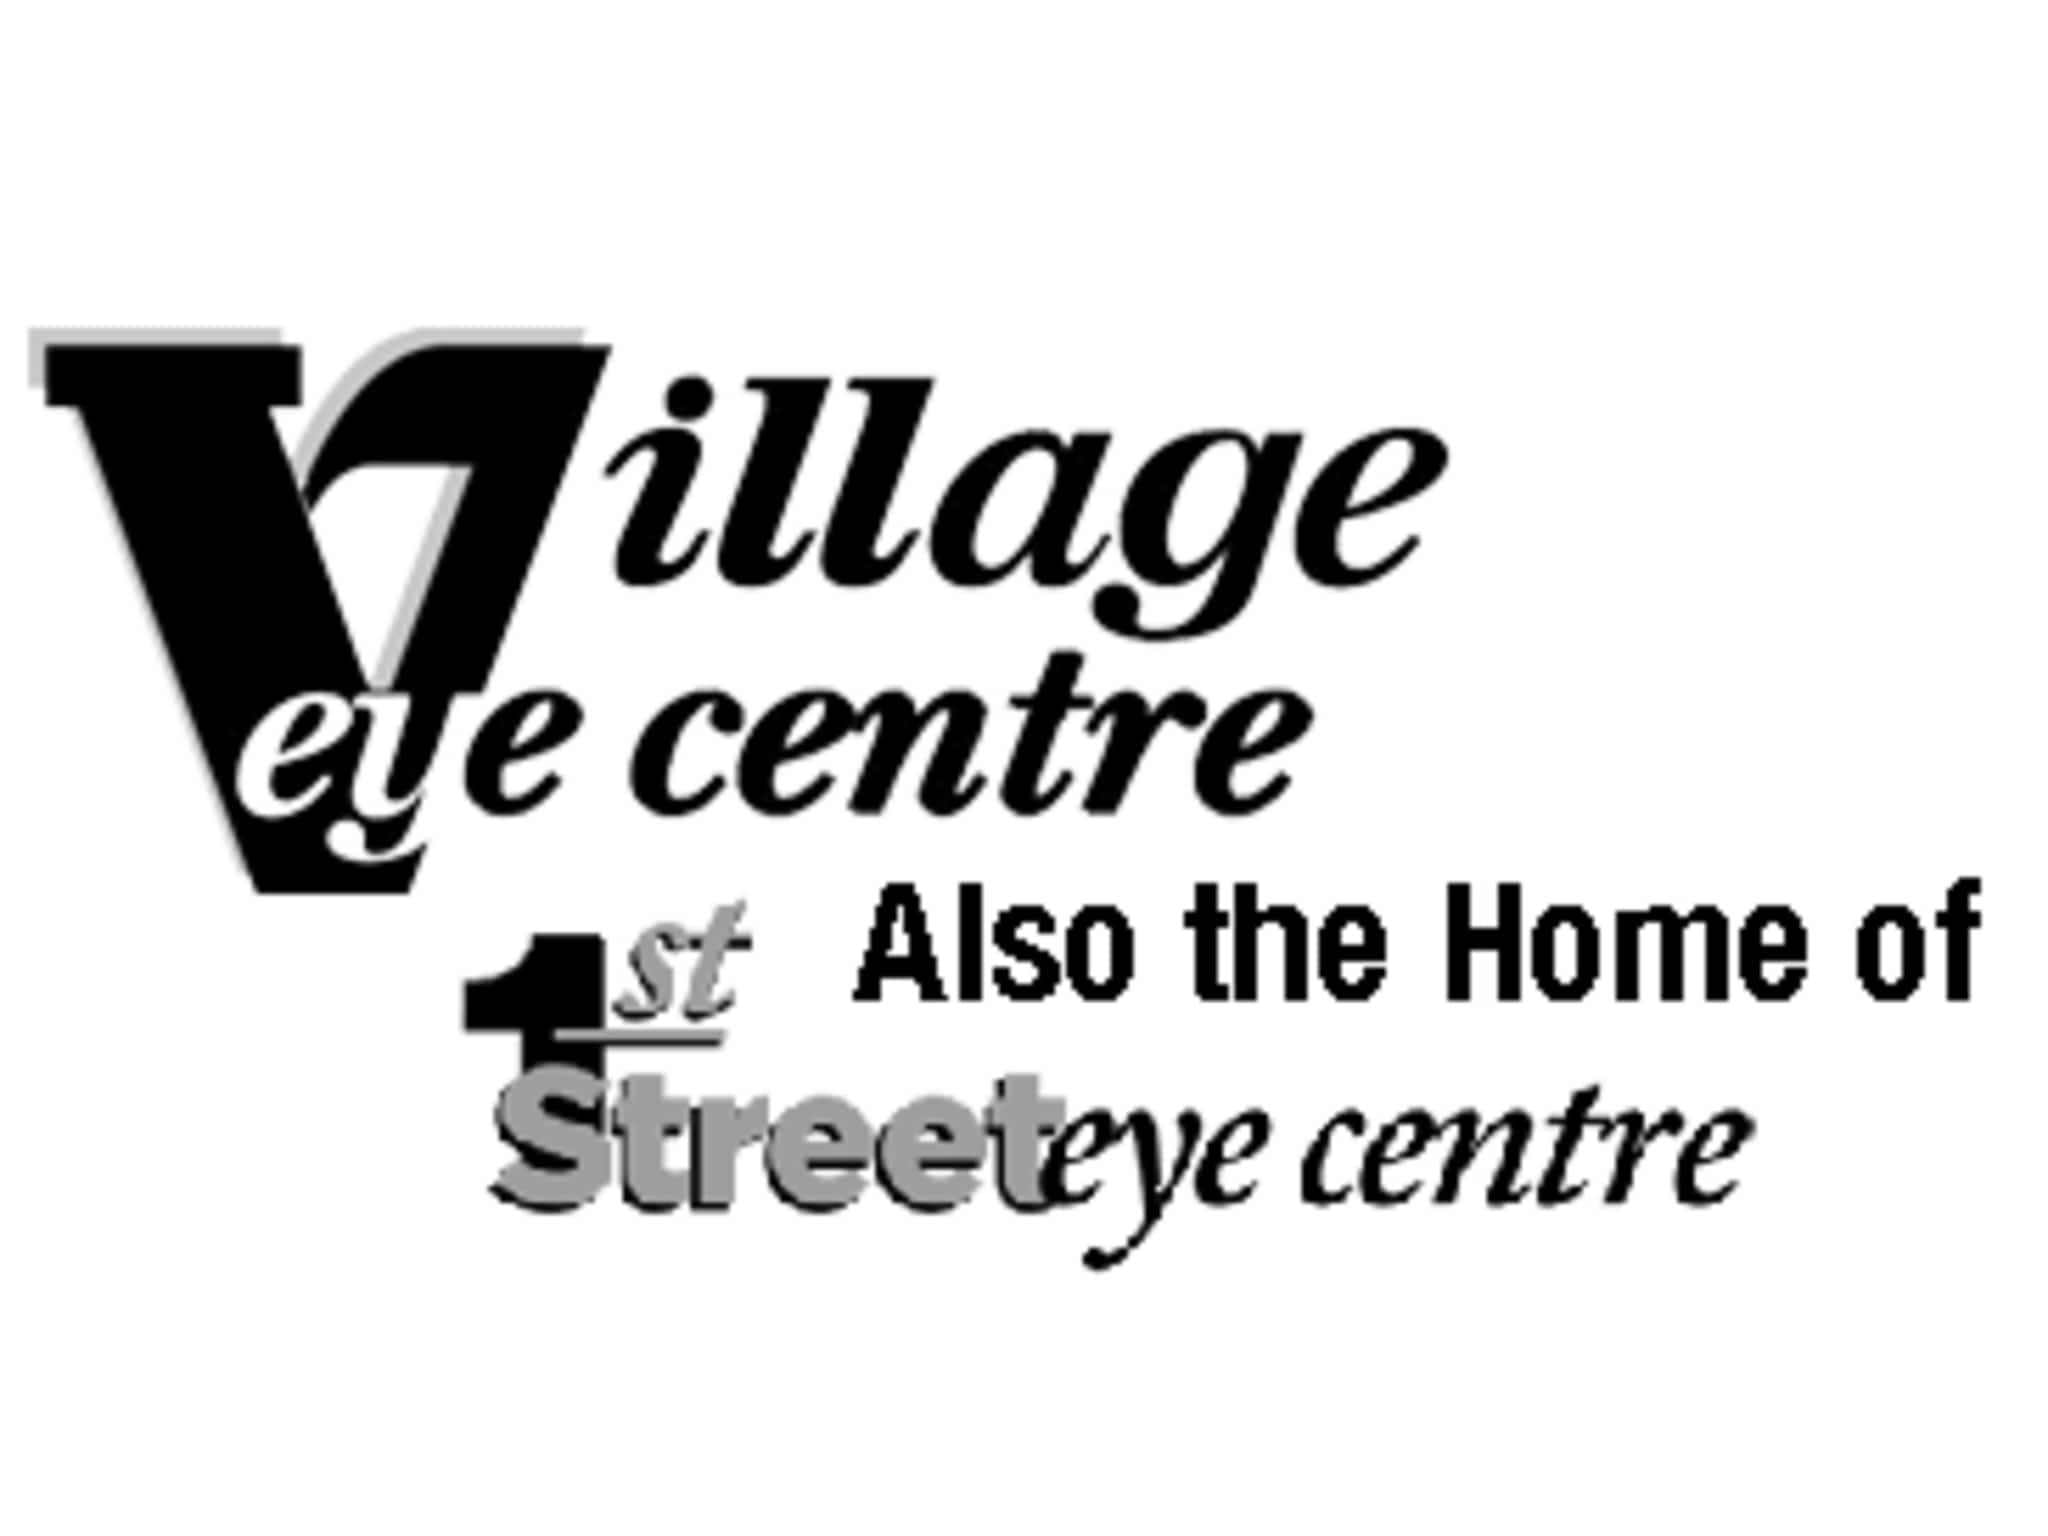 photo 1st Street Eye Centre